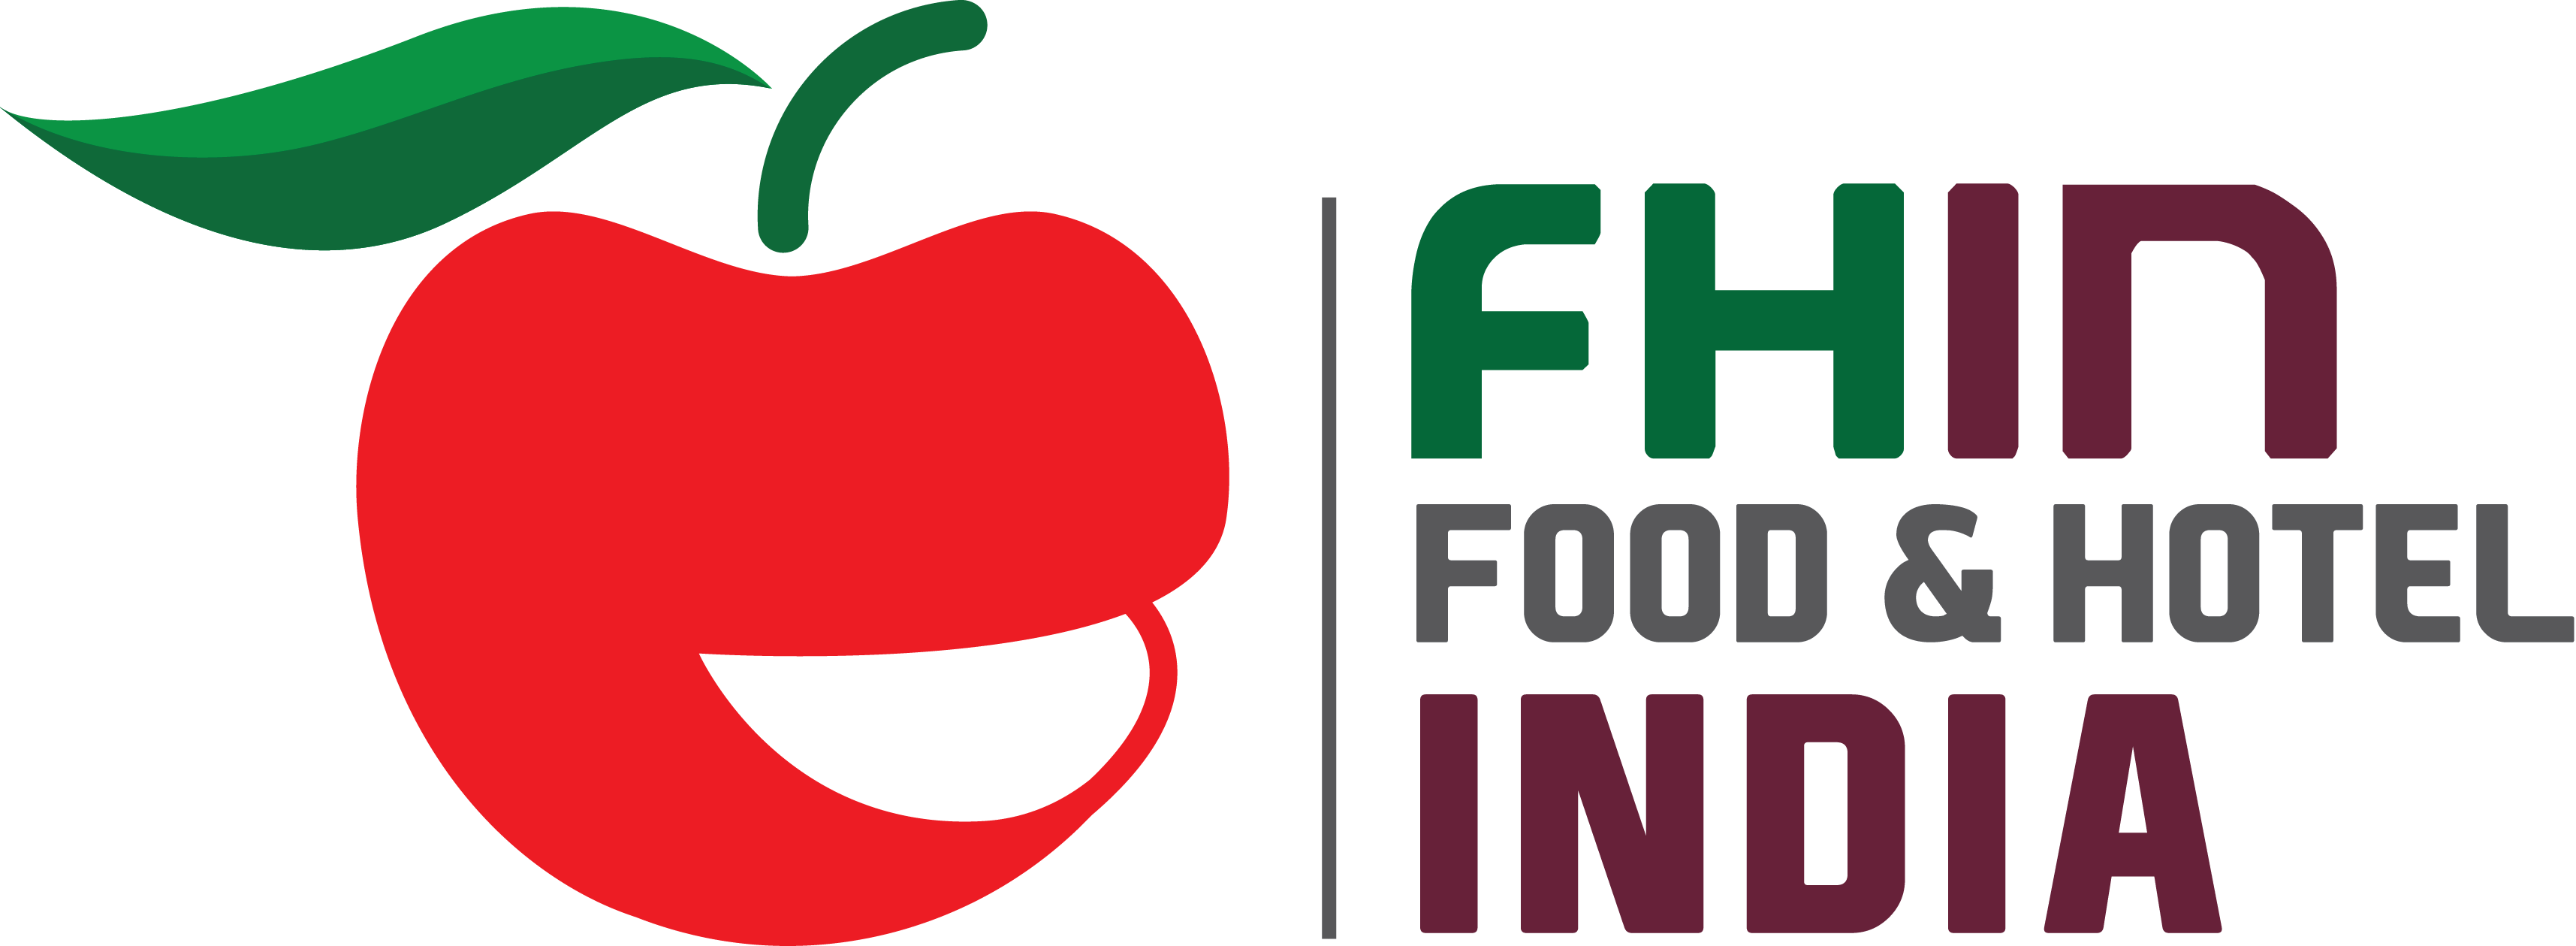 Food & Hotel India - Food And Hotel India 2018 Ubm (3430x1259)